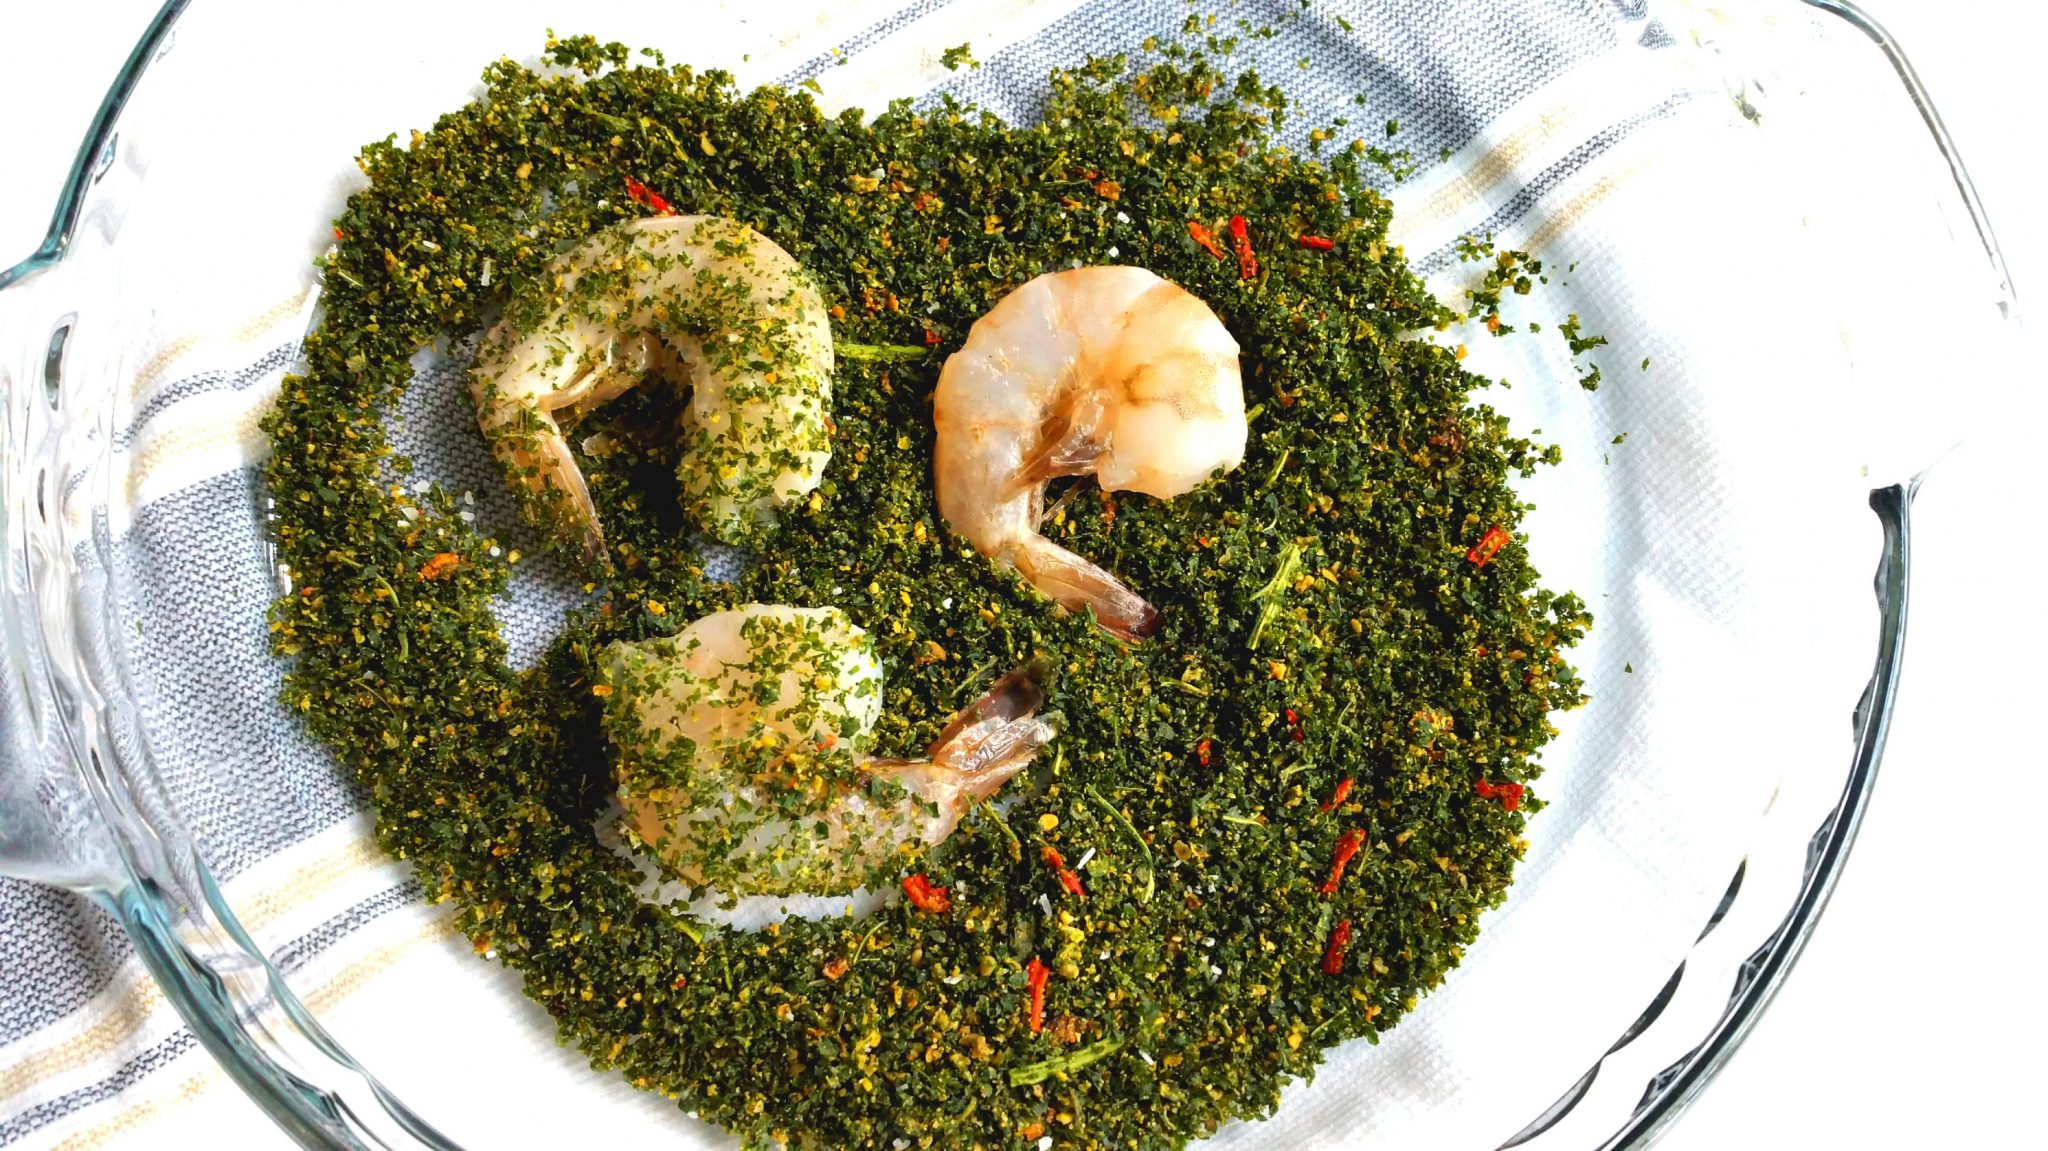 kale crusted shrimp Queen of Kale kale chips sweetsavant.com America's best food blog